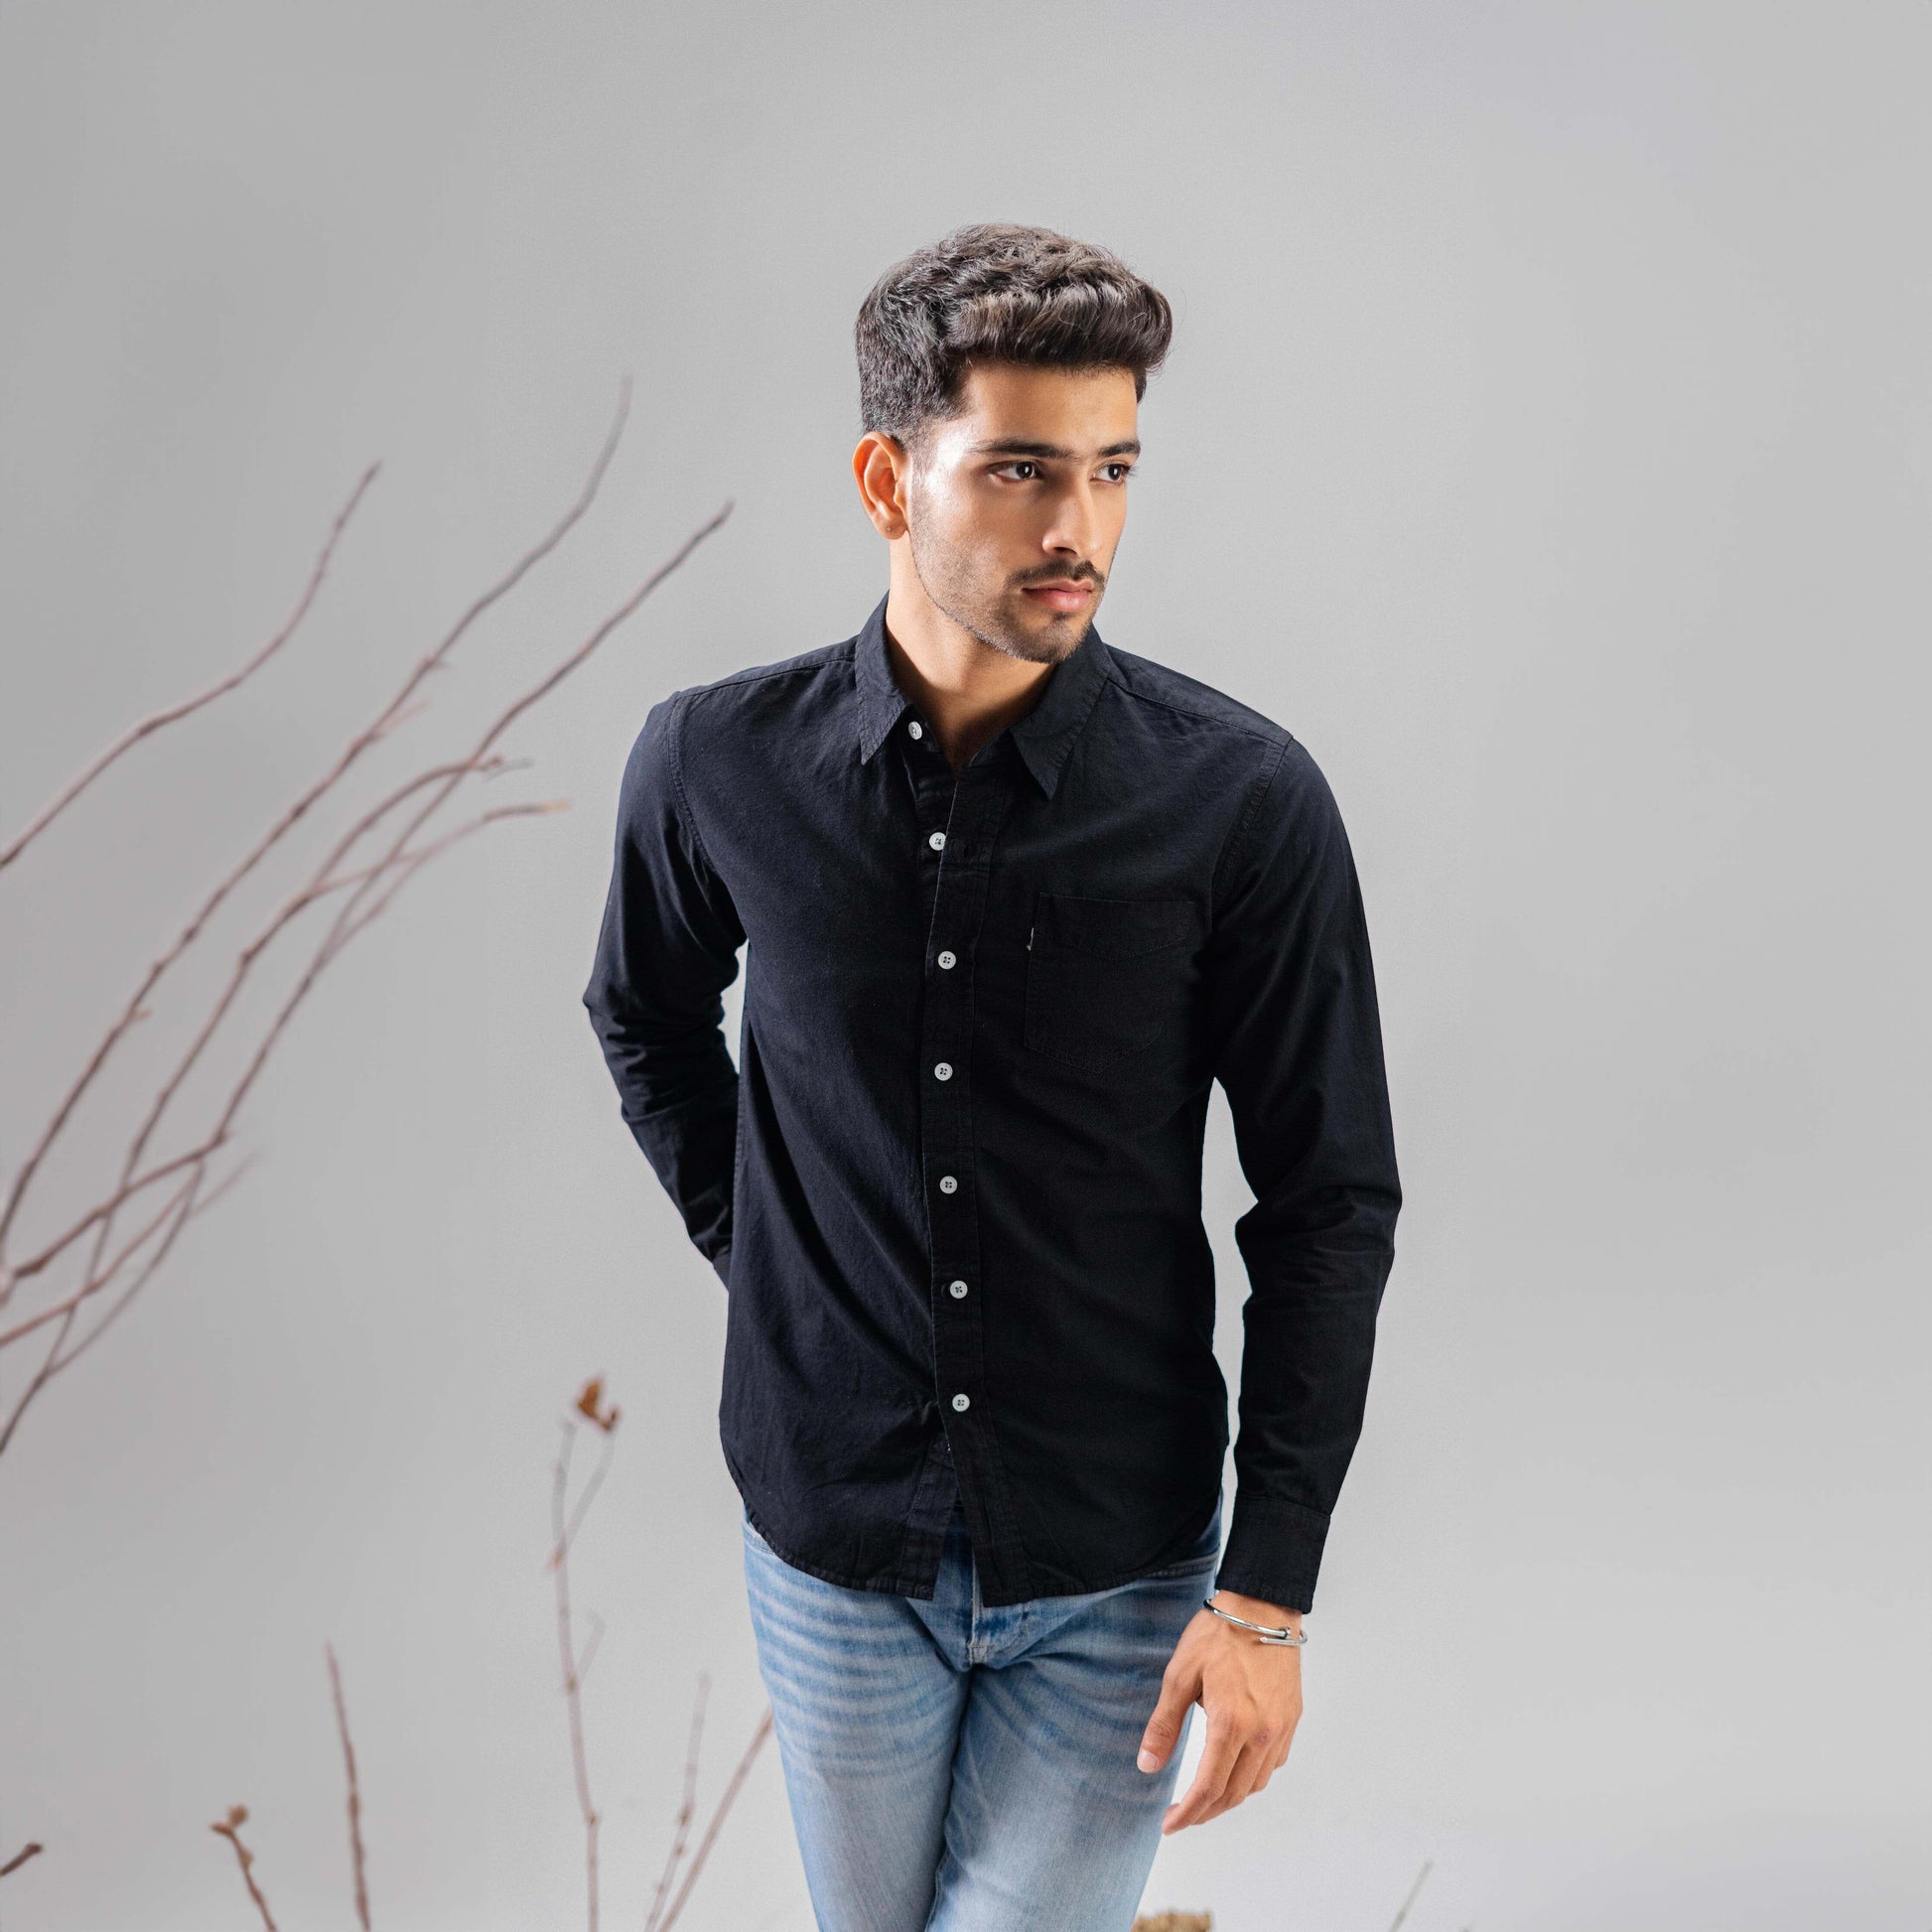 Cut Label Men's Amstetten Regular Fit Casual Shirt Men's Casual Shirt Minhas Garments Black S 